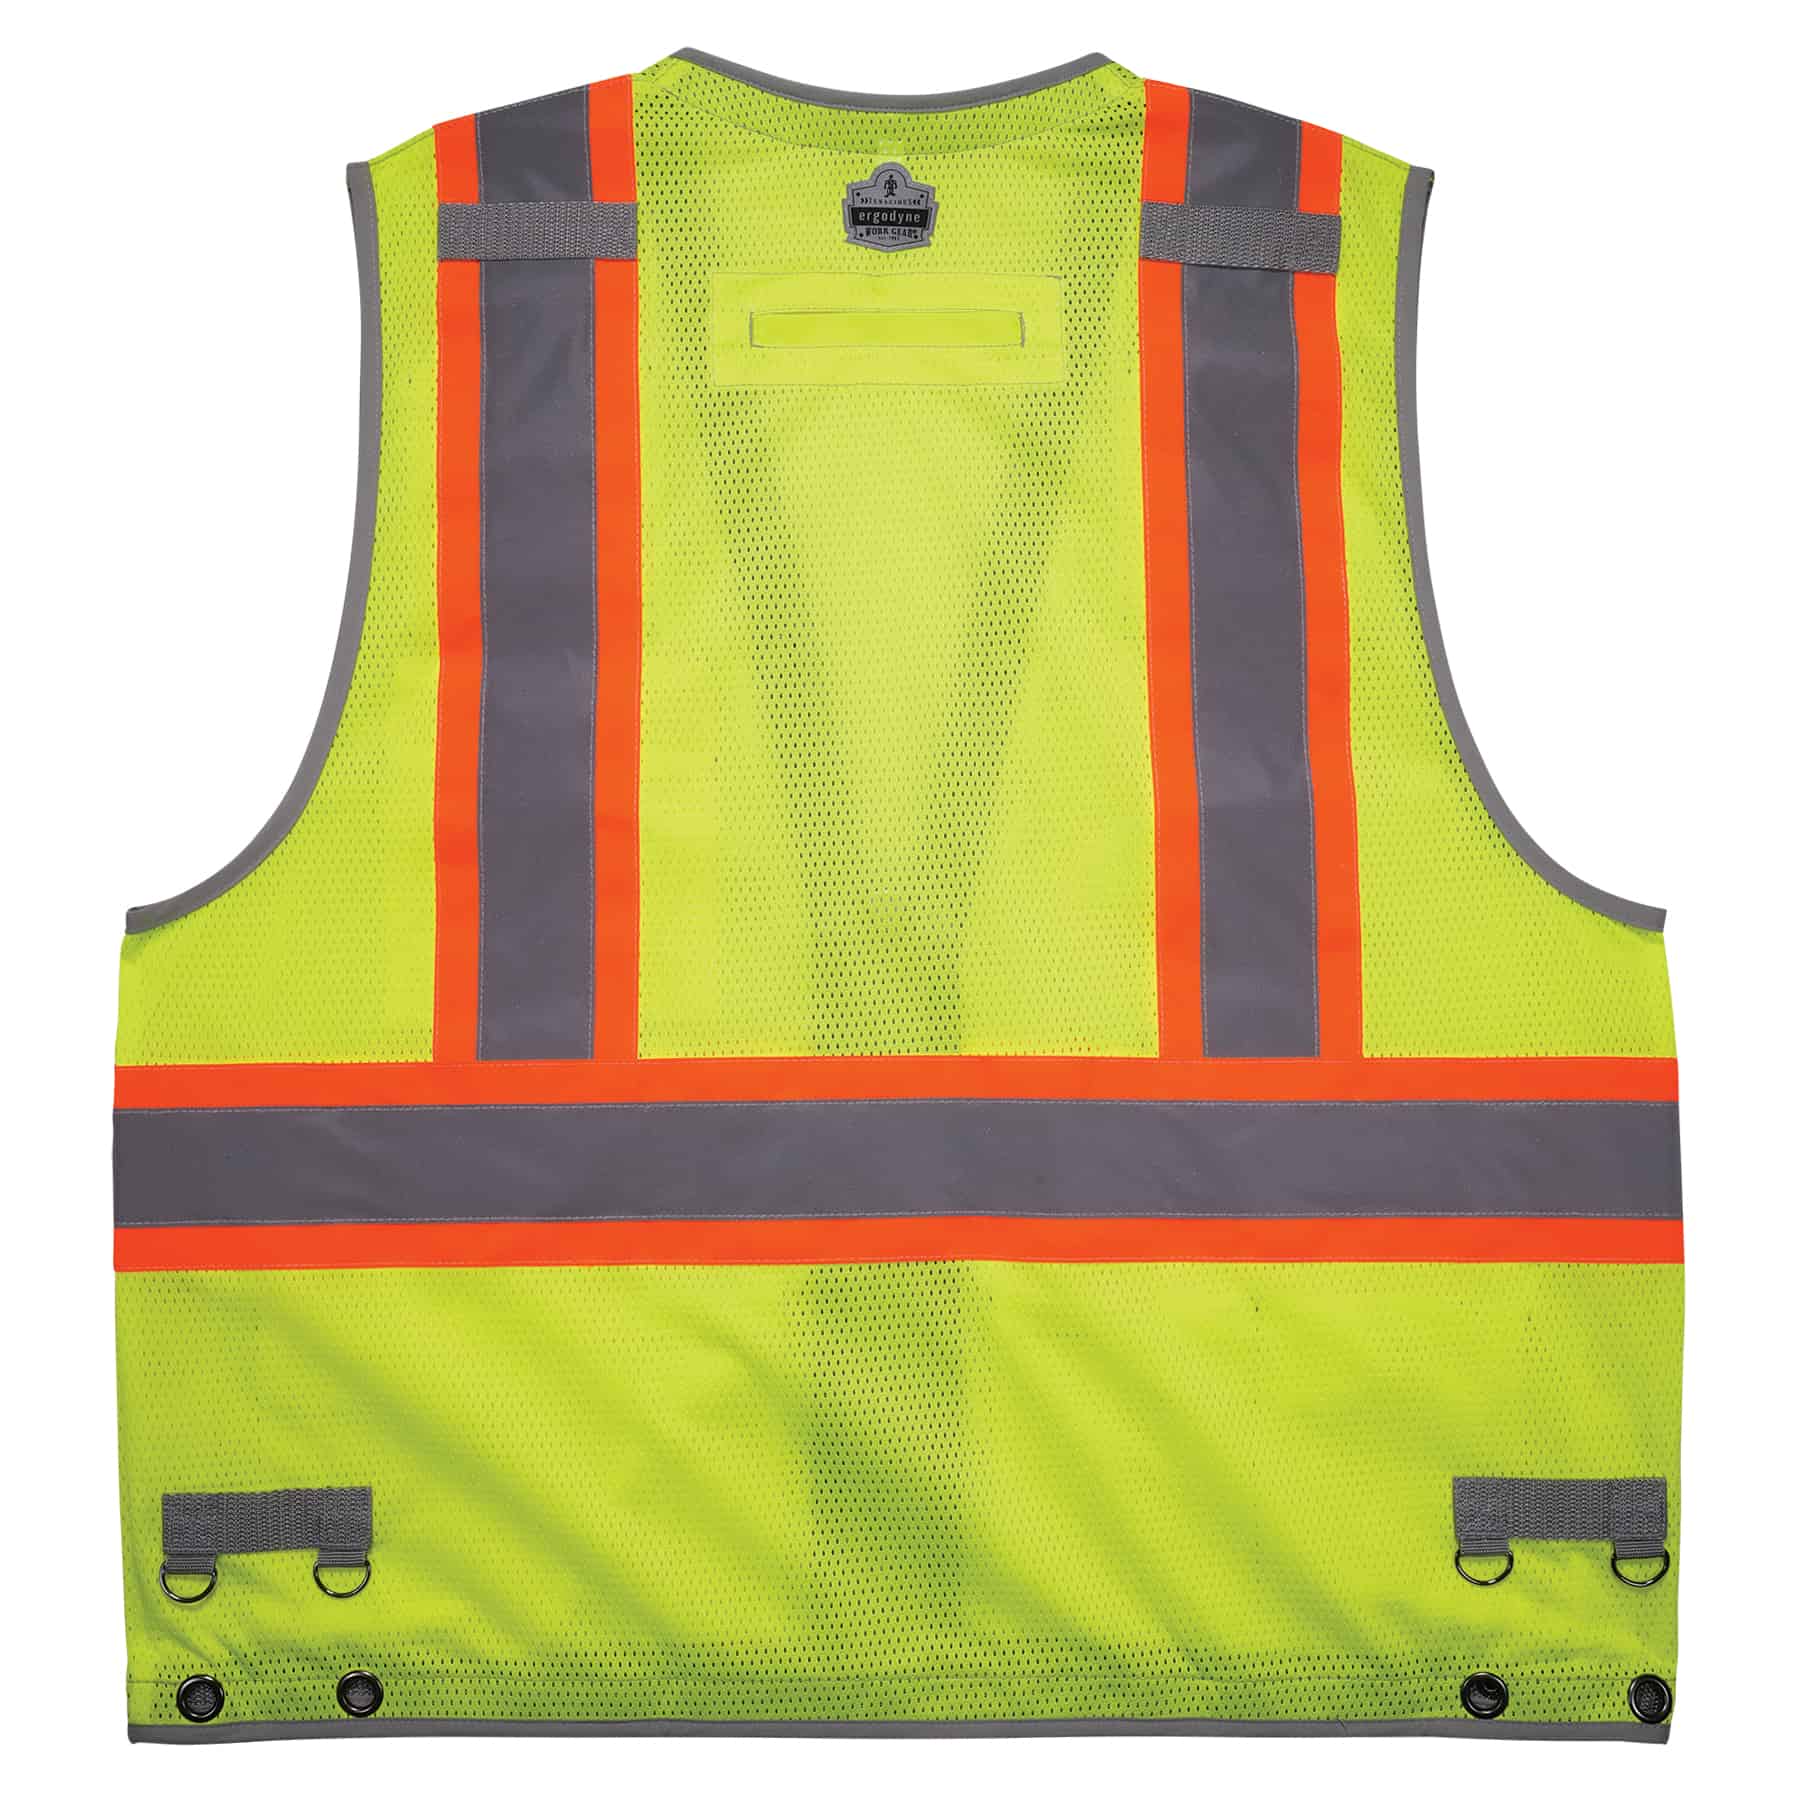 Snap On Snap-On Tools Branded Hi Viz High Visibility PPE Safety Vest size XL 